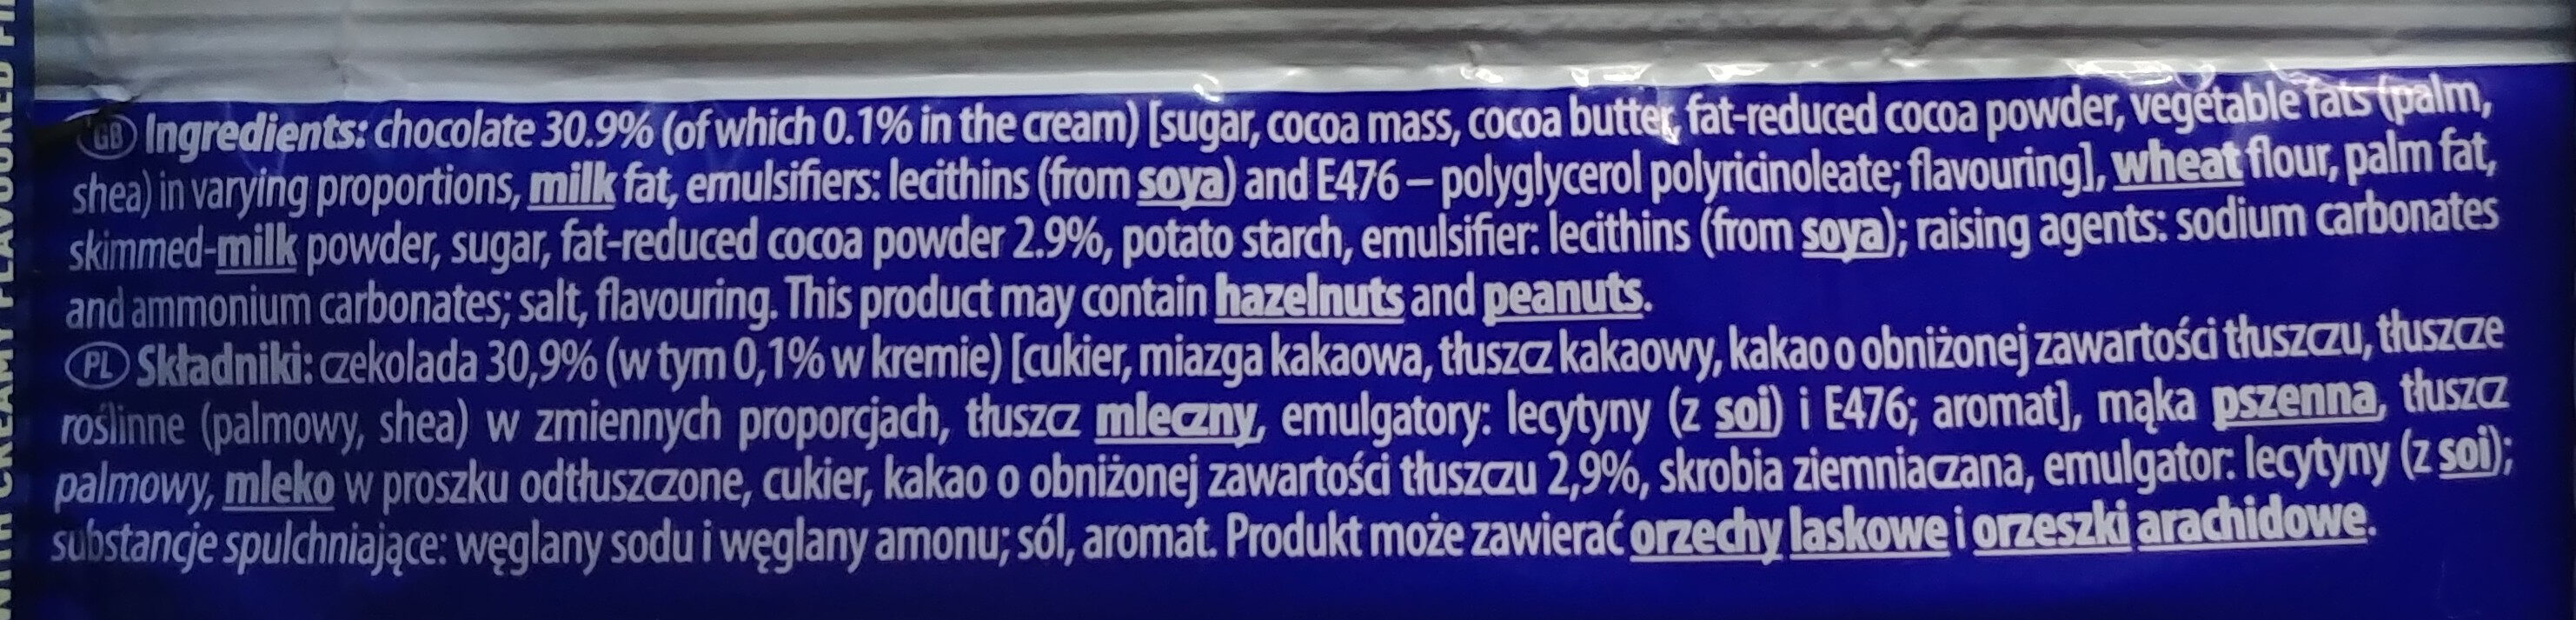 Mega Grześki - Ingredients - pl